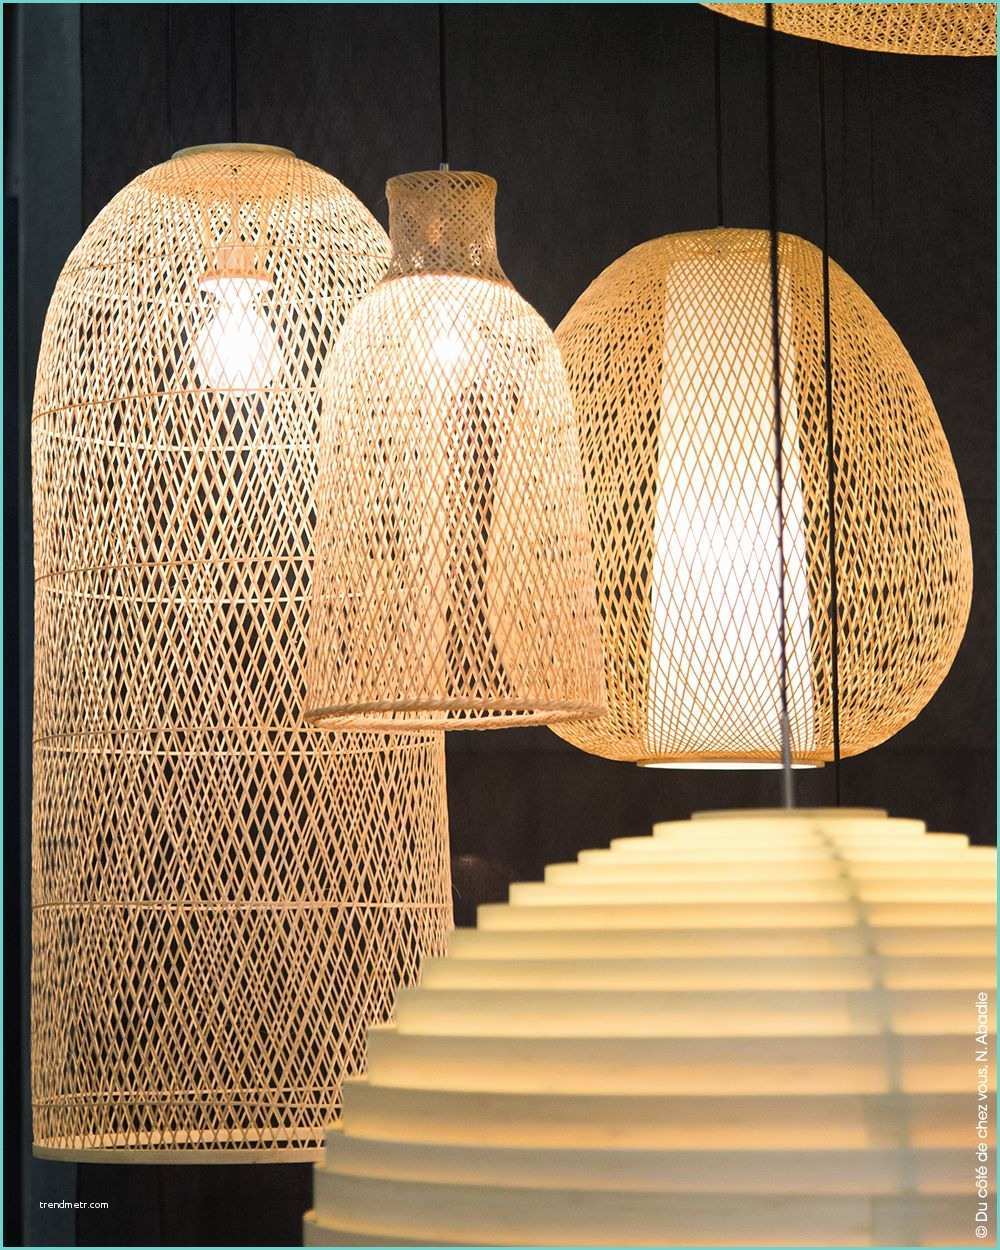 Suspension Luminaire En Osier Design Hollandais Ay Illuminate 2016 Lampes Vannerie